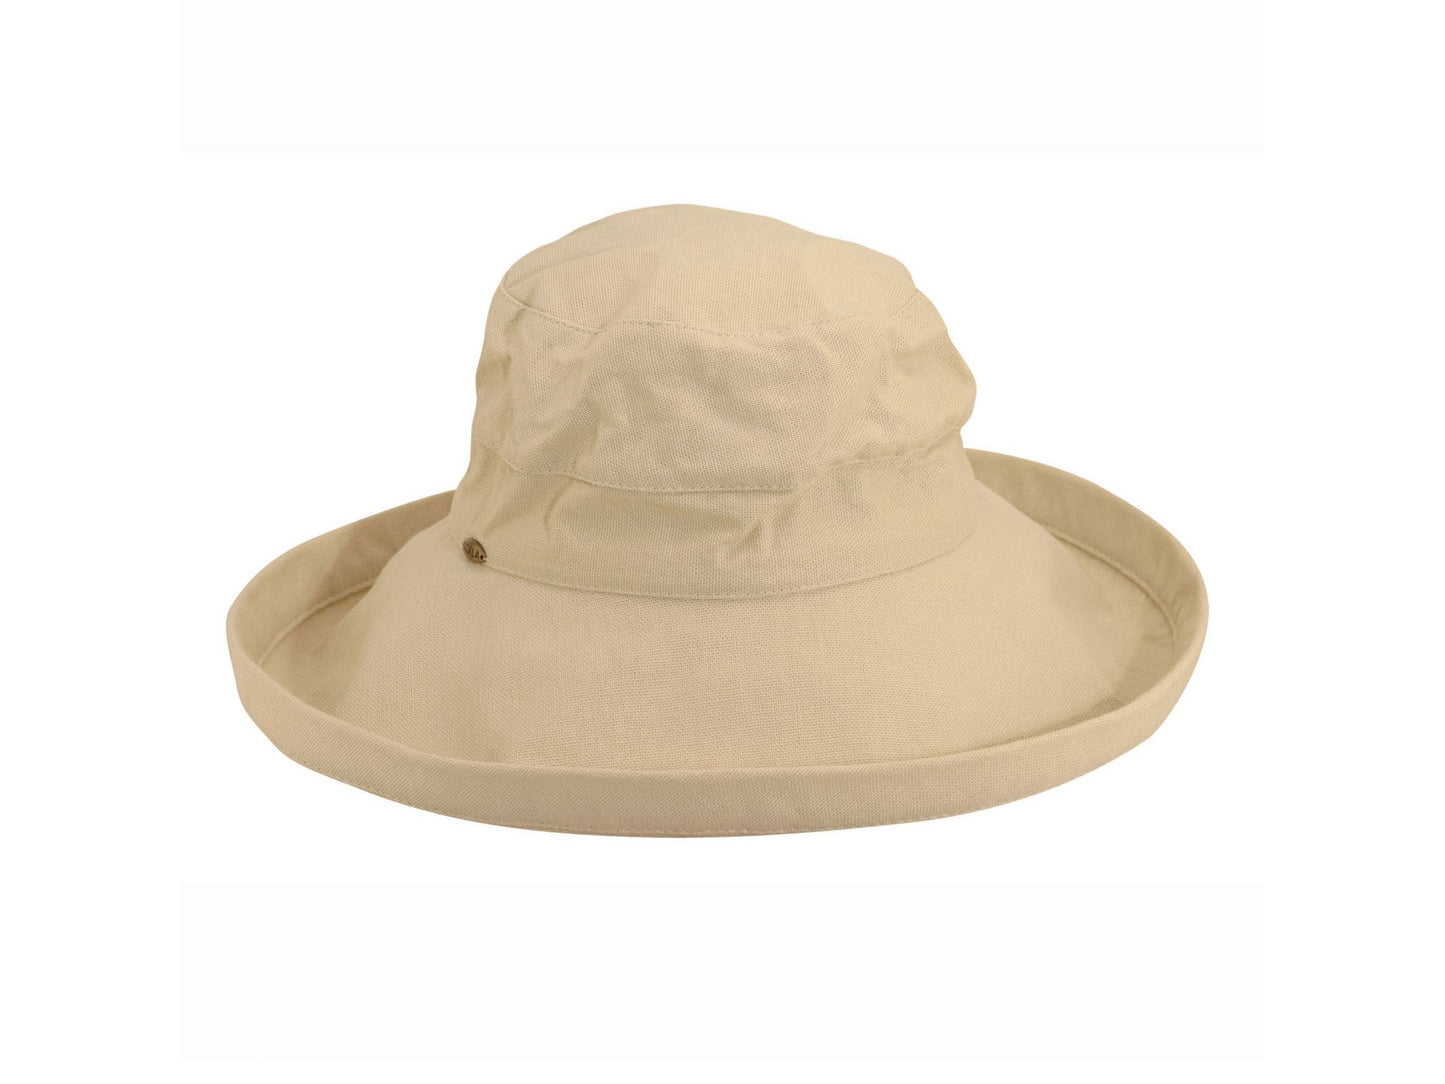 Cotton Big Brim UPF 50 Sun Hat